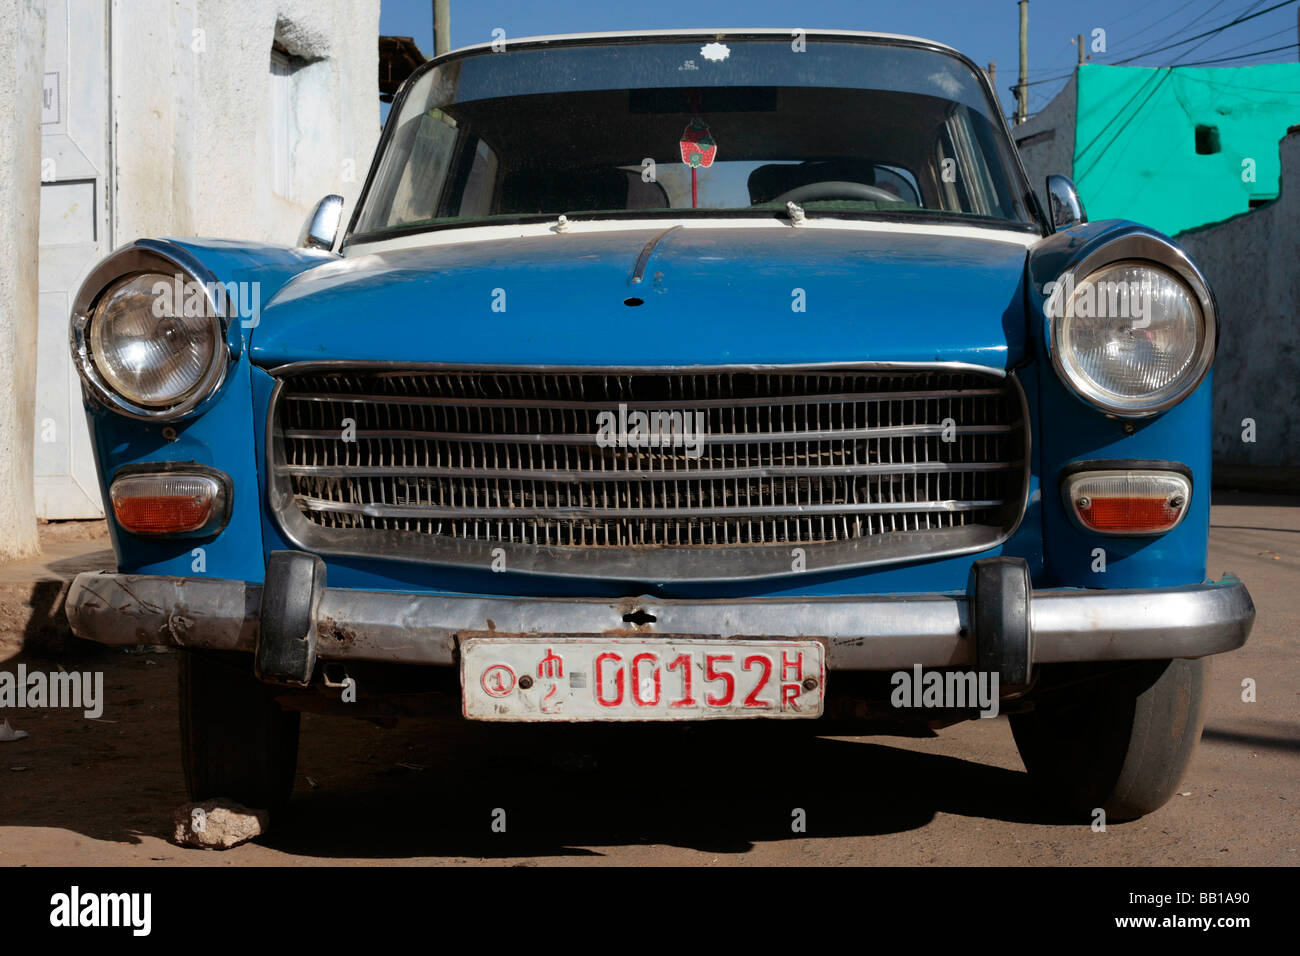 Old Peugeot Taxi in Harar Ethiopia Stock Photo